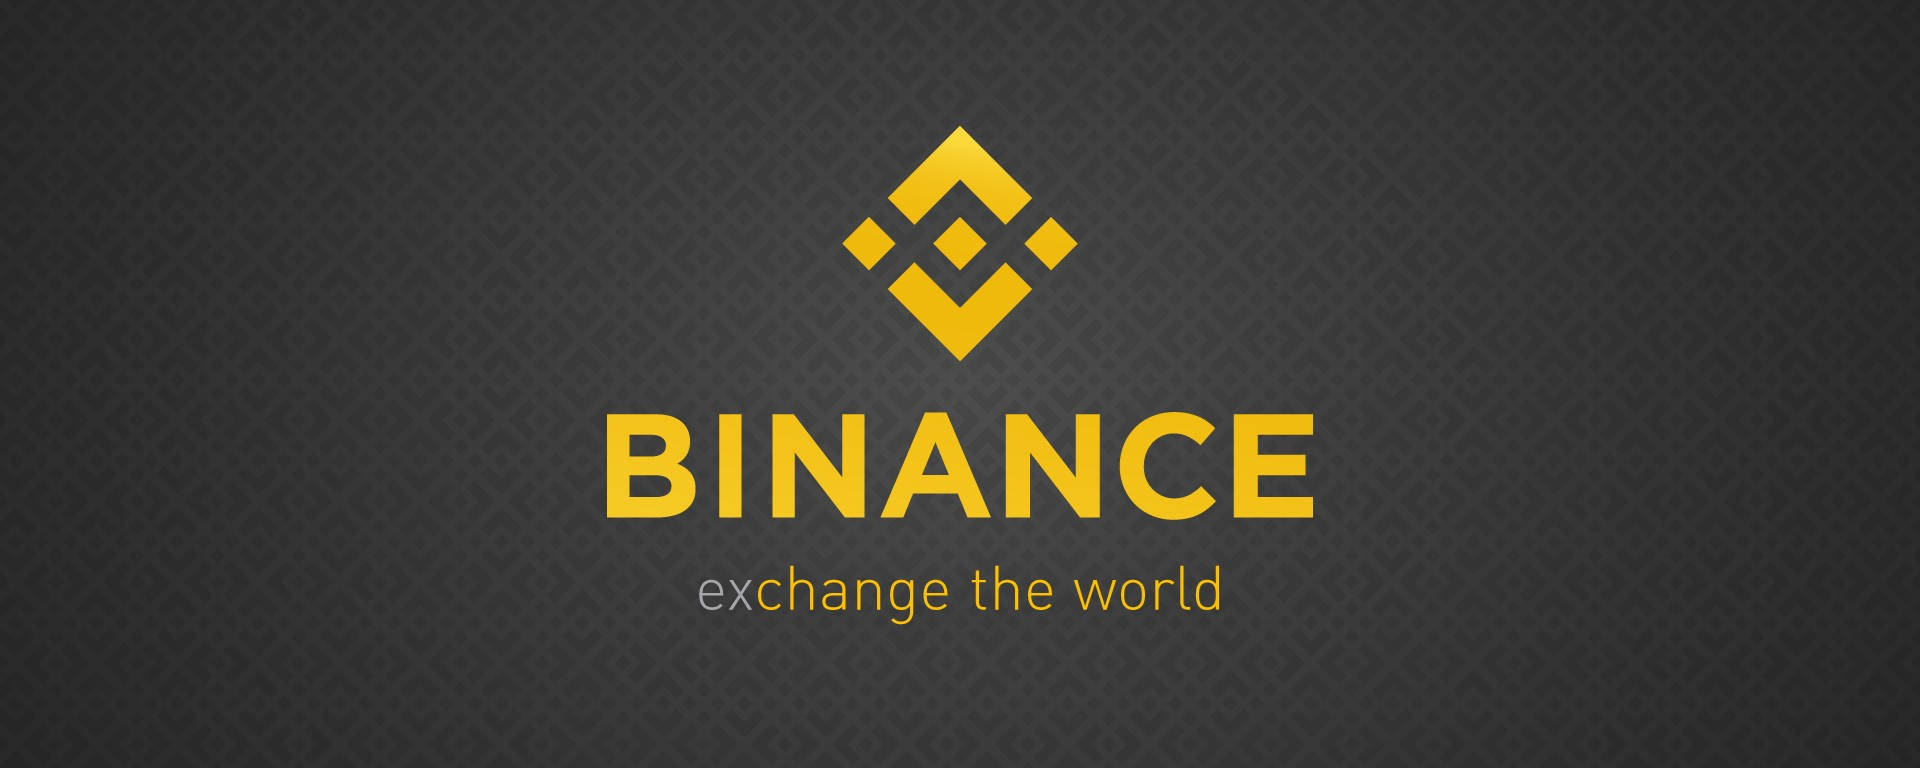 Binance Logo And Tag Line Background